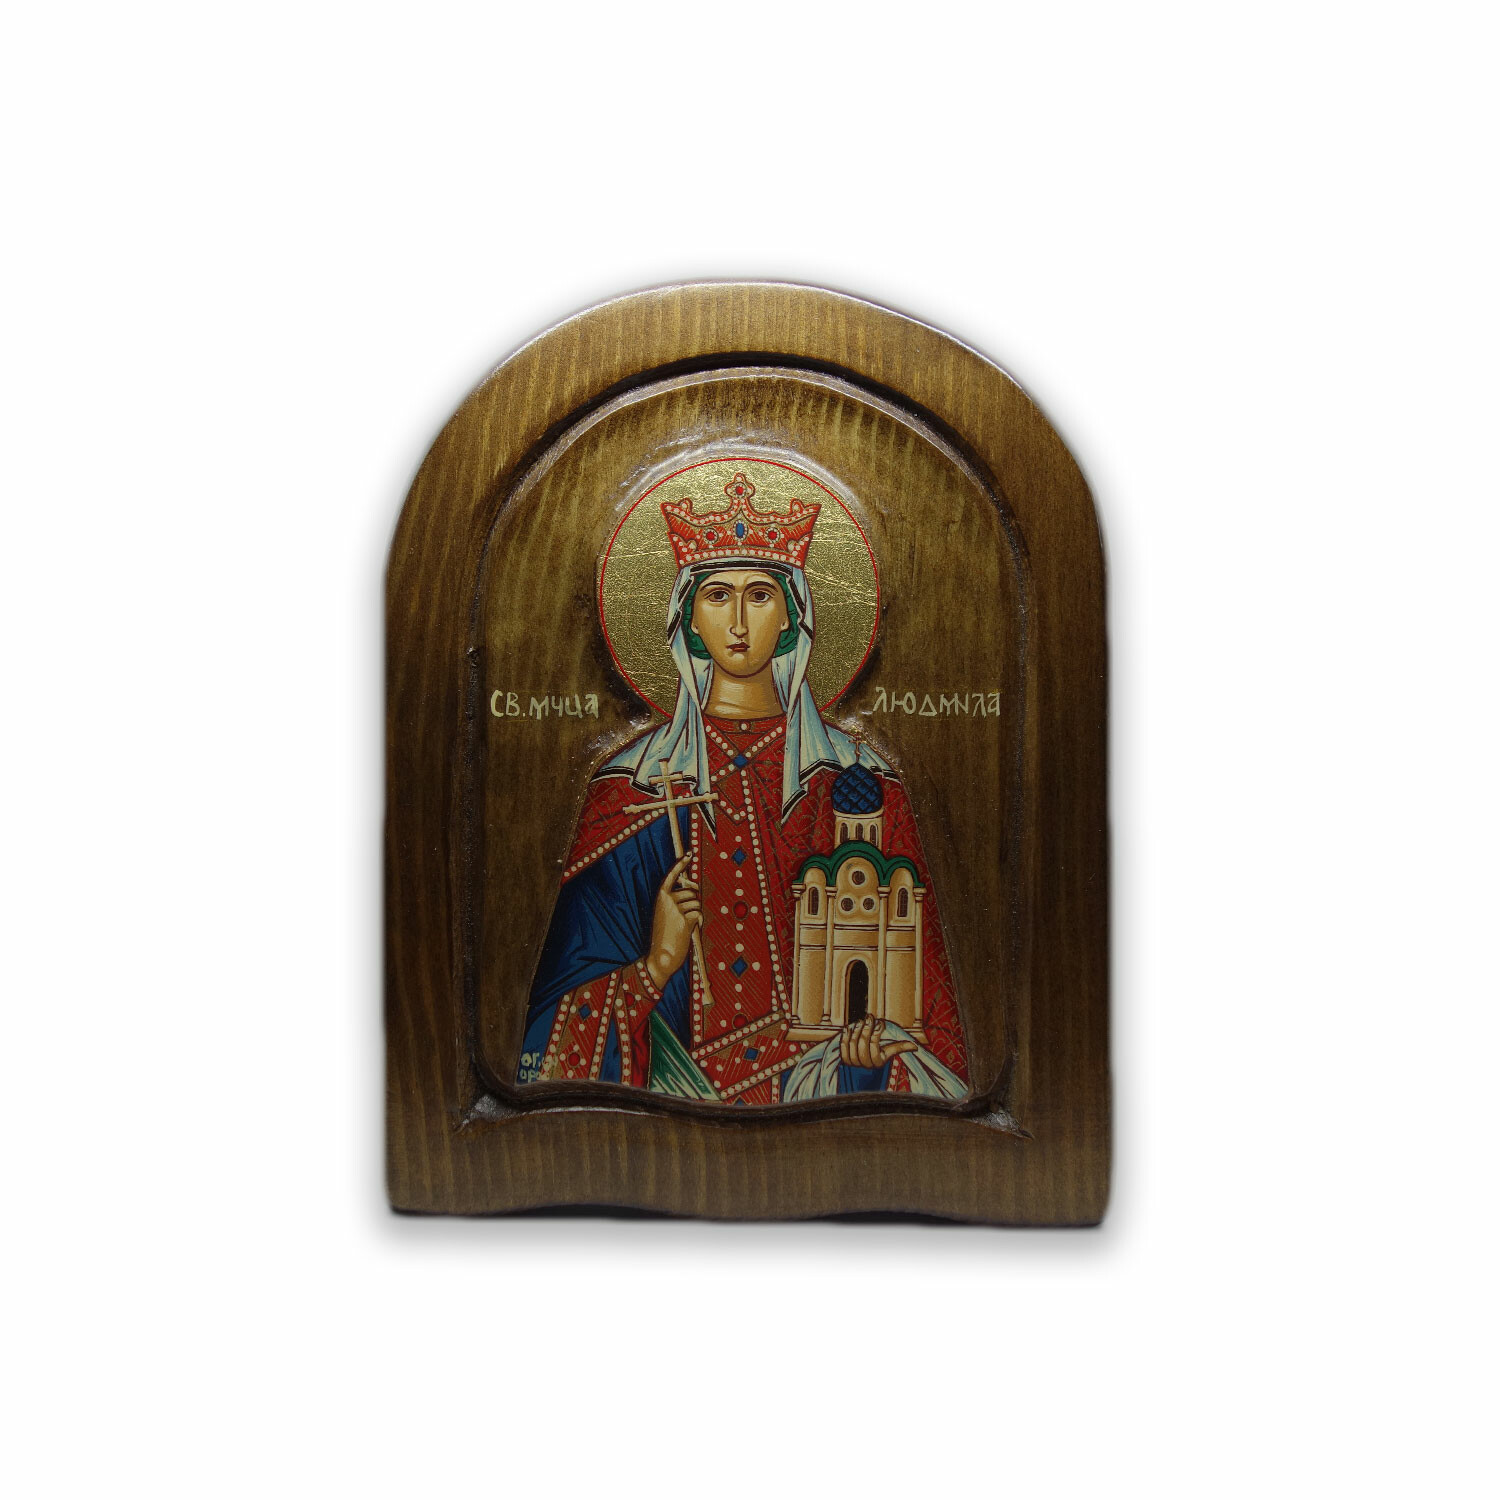 Saint Ludmila